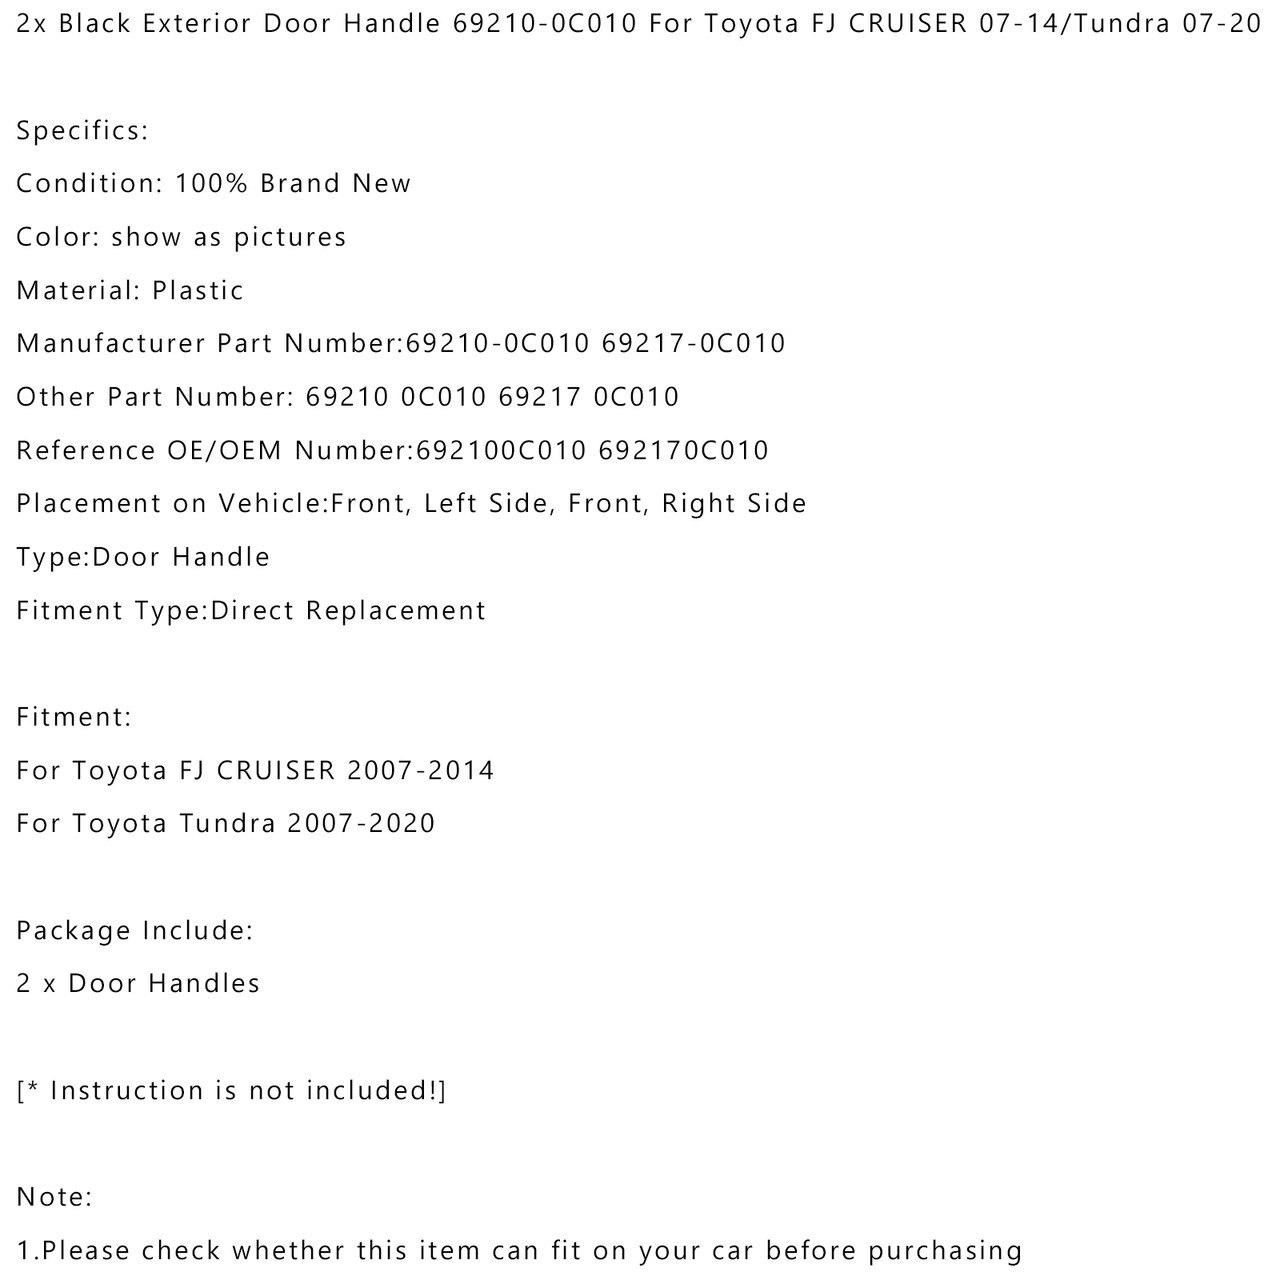 2x Black Exterior Door Handle 69210-0C010 Fit for Toyota FJ CRUISER Tundra 2007-2014 BLK